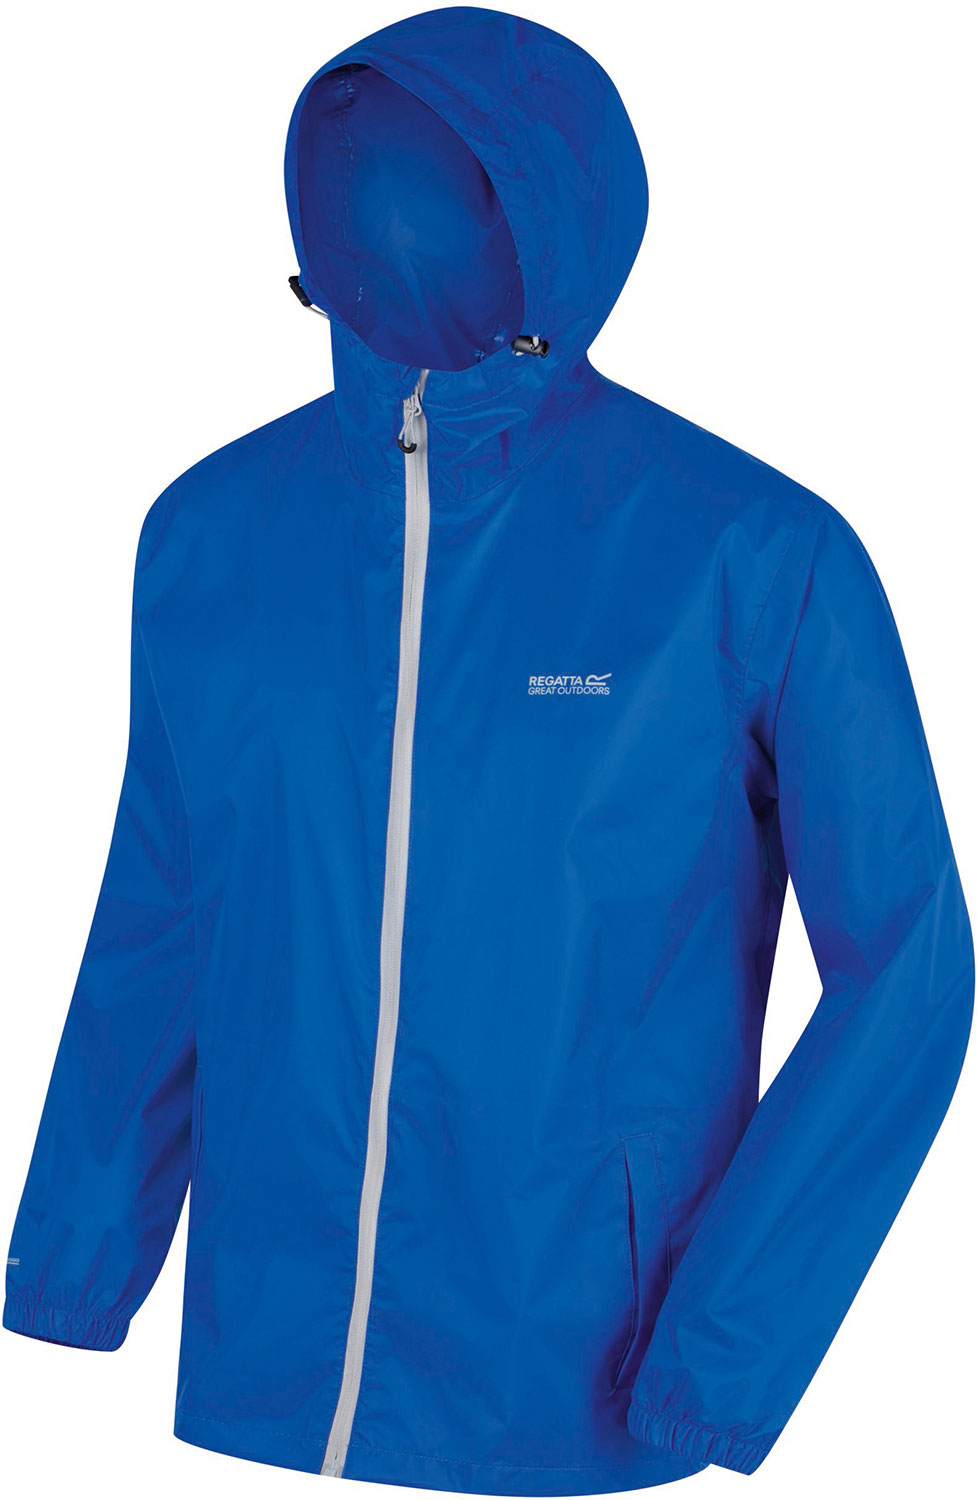 Regatta Mens Pack-It III Waterproof Jacket Top Navy Blue Sports Outdoors Full 